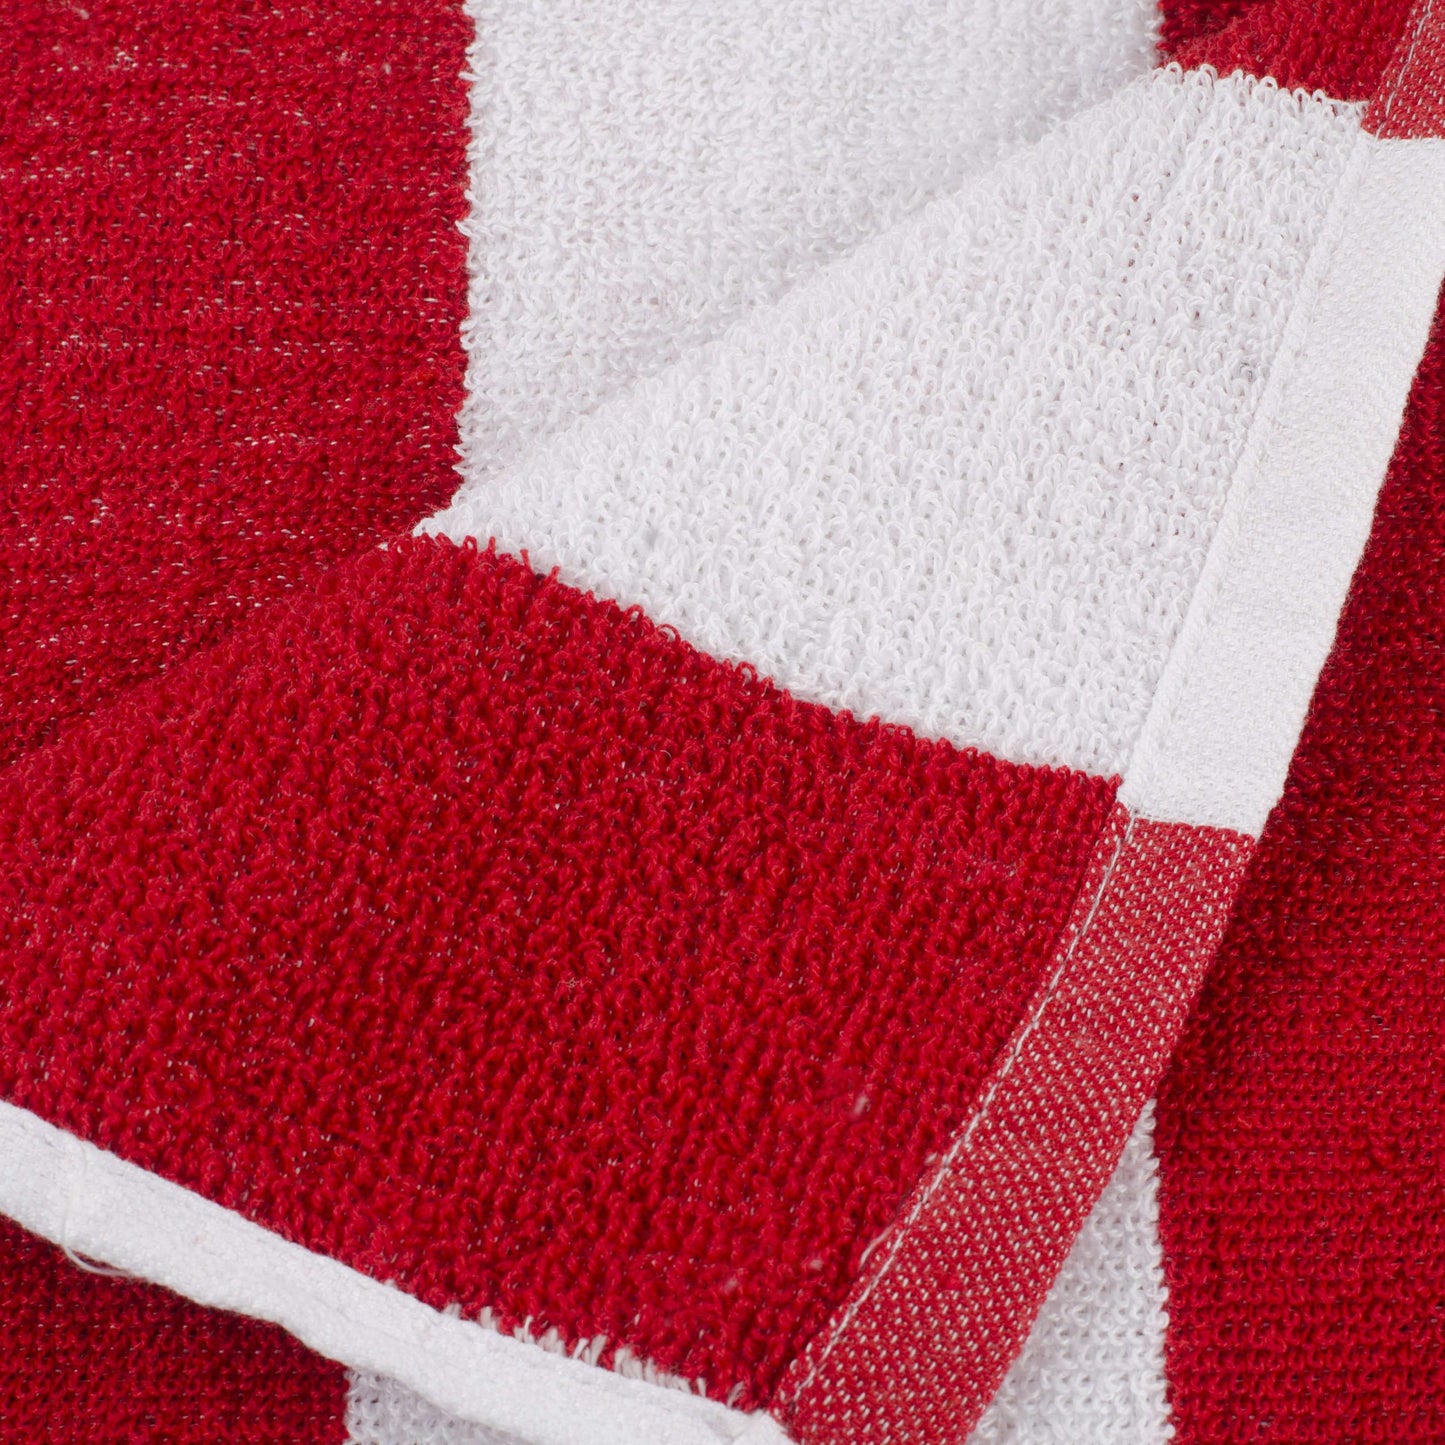 Turkish Bath Premium Cotton Stripe Bath and Pool Towel : Red - SWHF